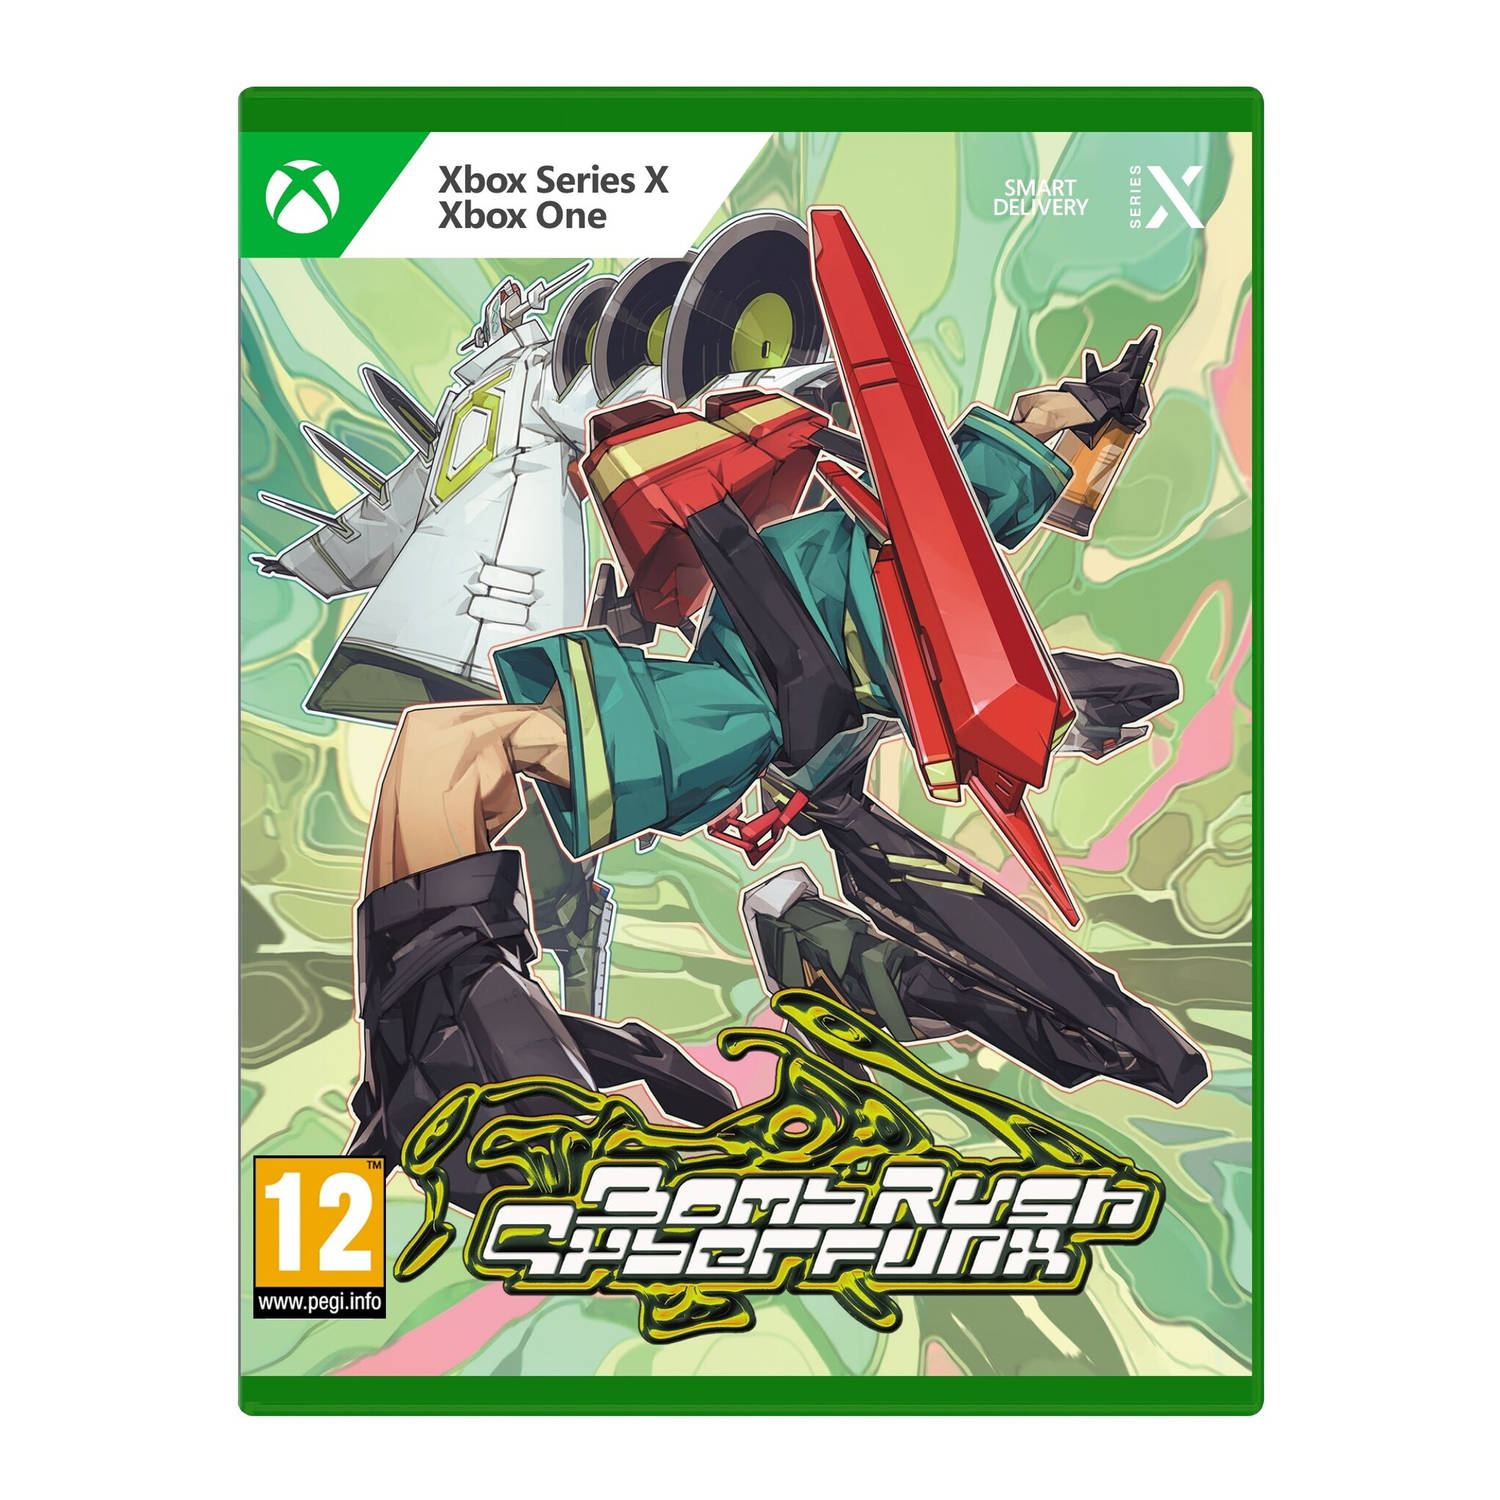 Bomb Rush Cyberfunk Xbox One & Series X